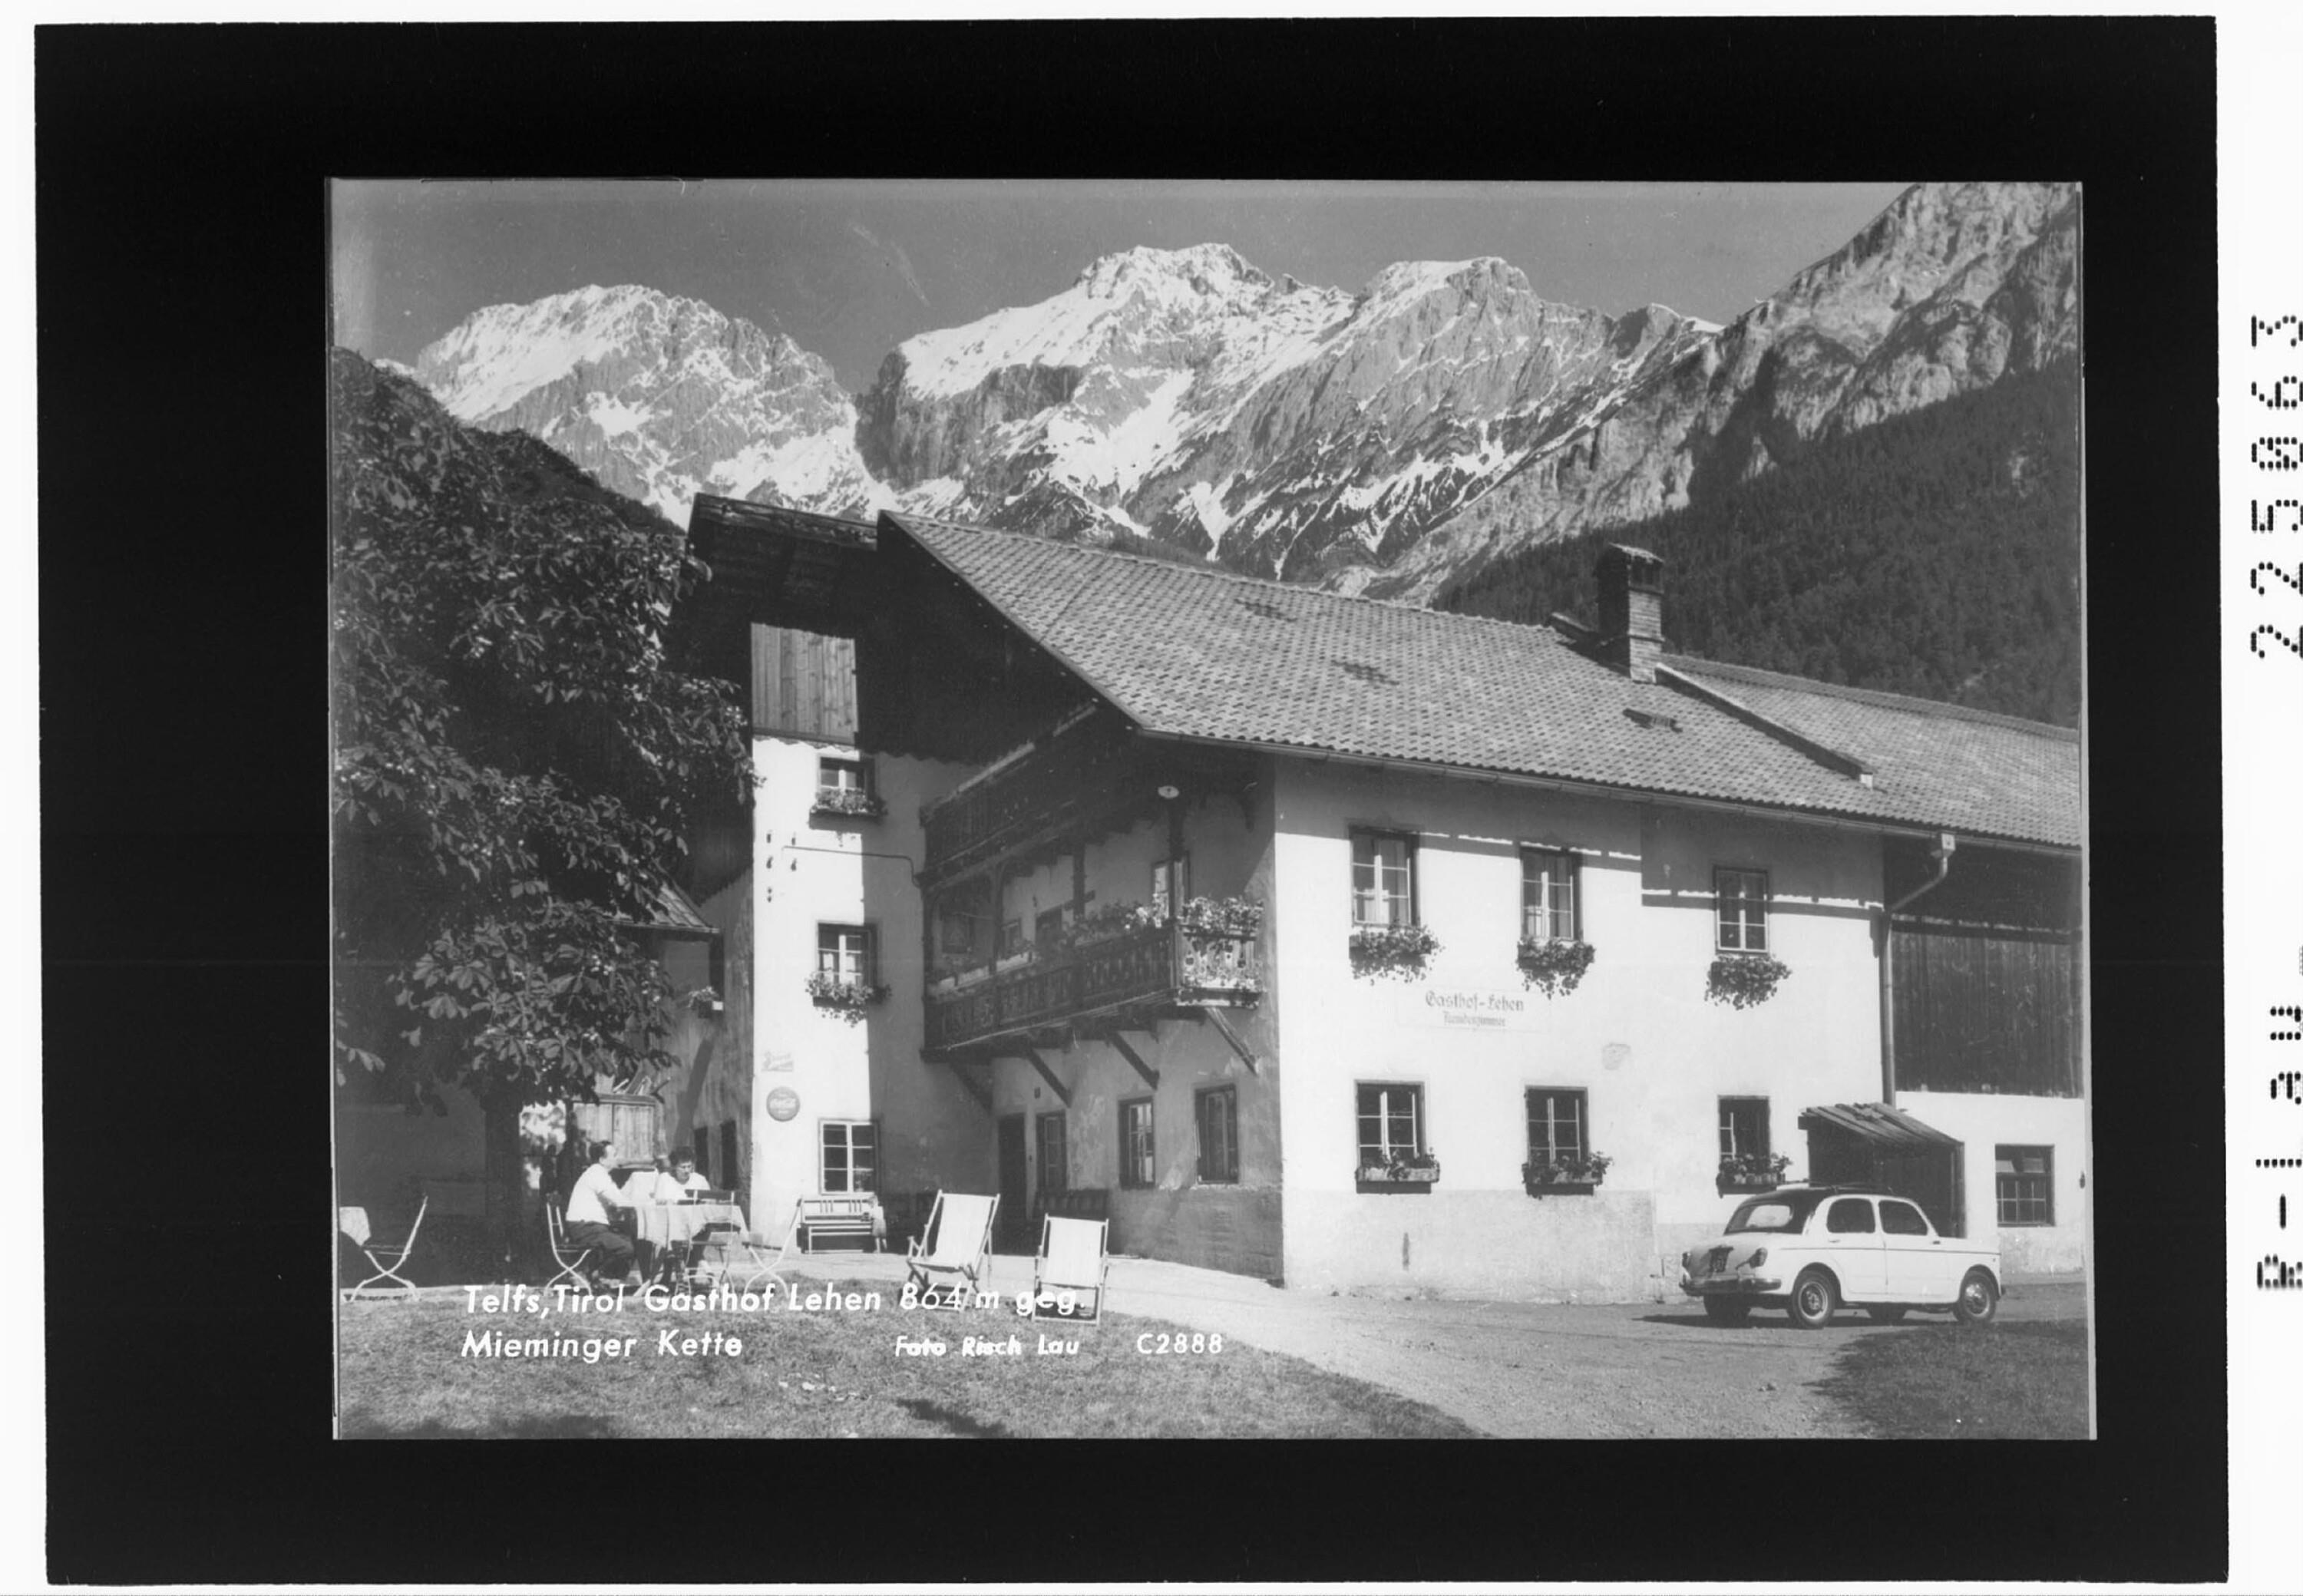 Telfs in Tirol / Gasthof Lehen 864 m gegen Mieminger Kette></div>


    <hr>
    <div class=